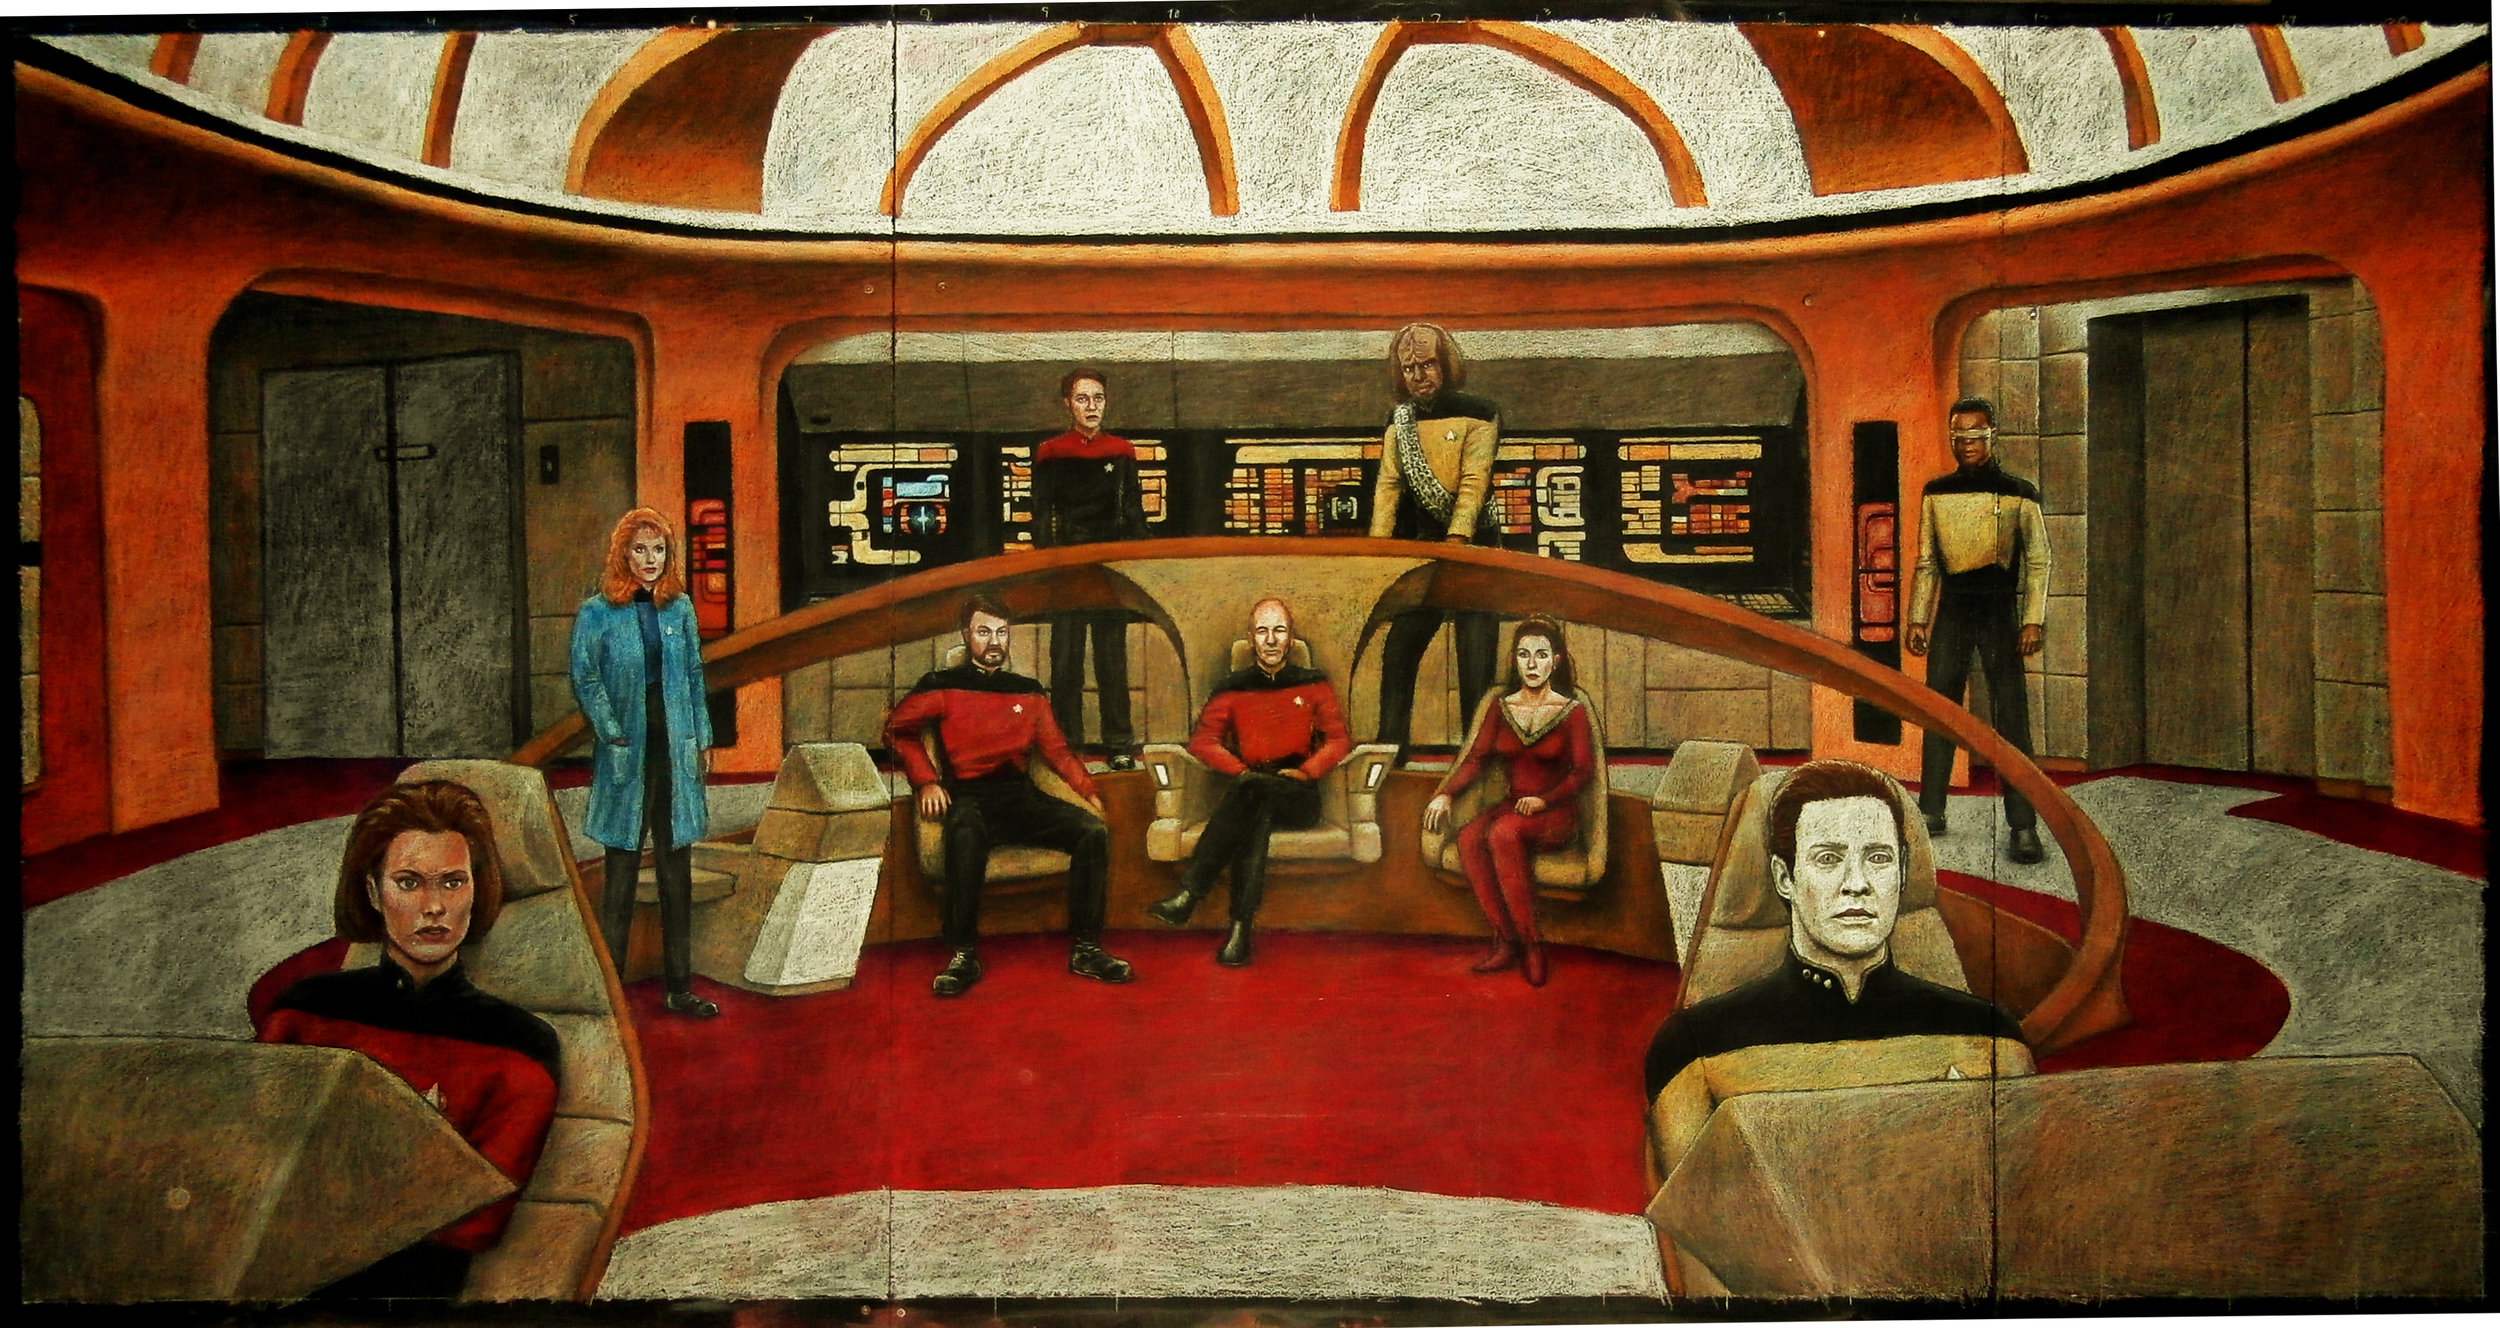 Star Trek: The Next Generation chalk mural